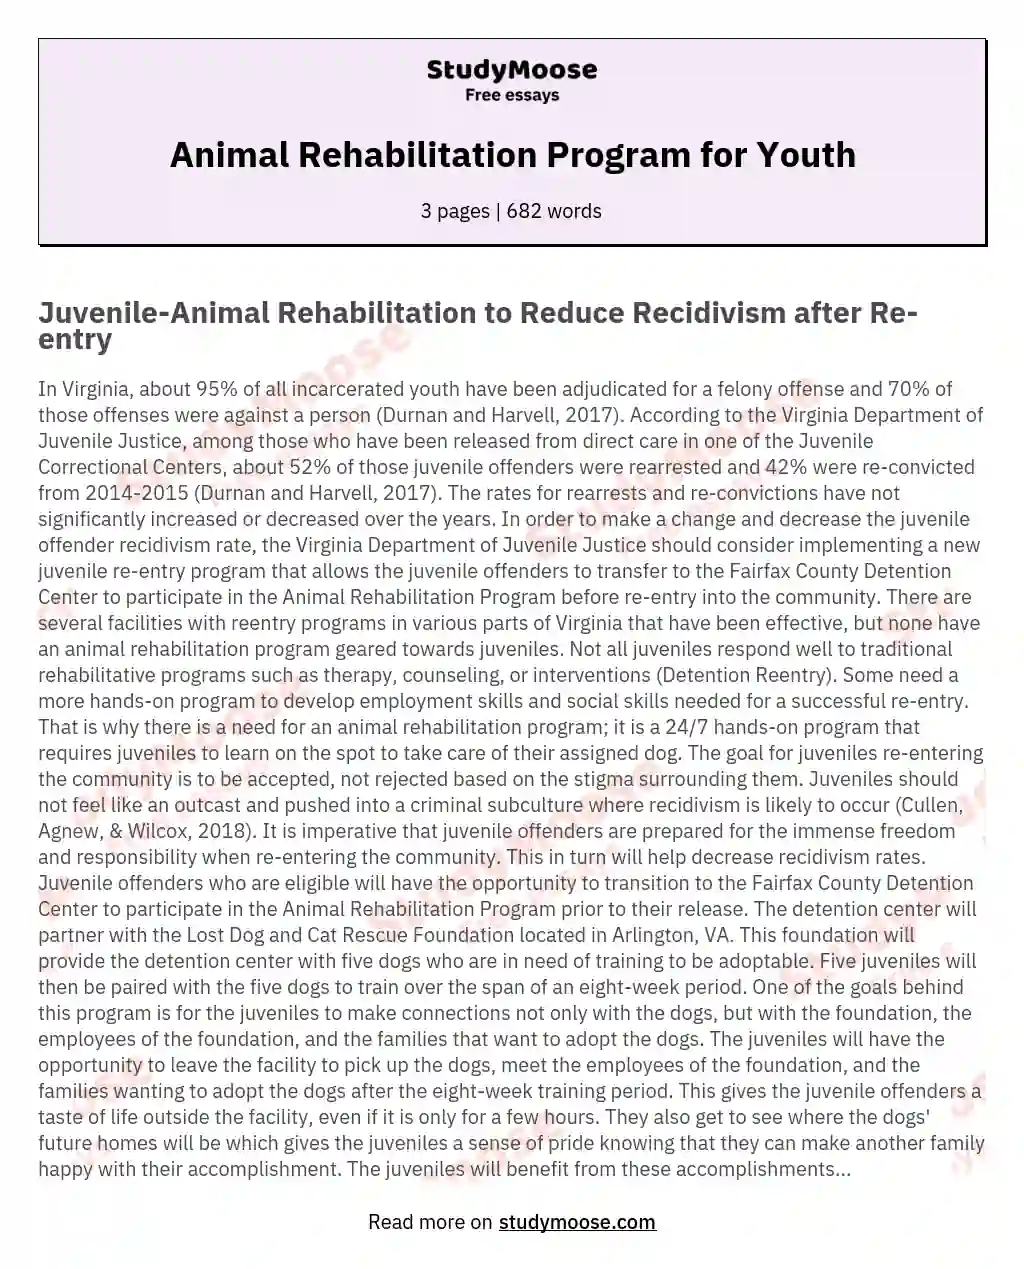 Animal Rehabilitation Program for Youth essay